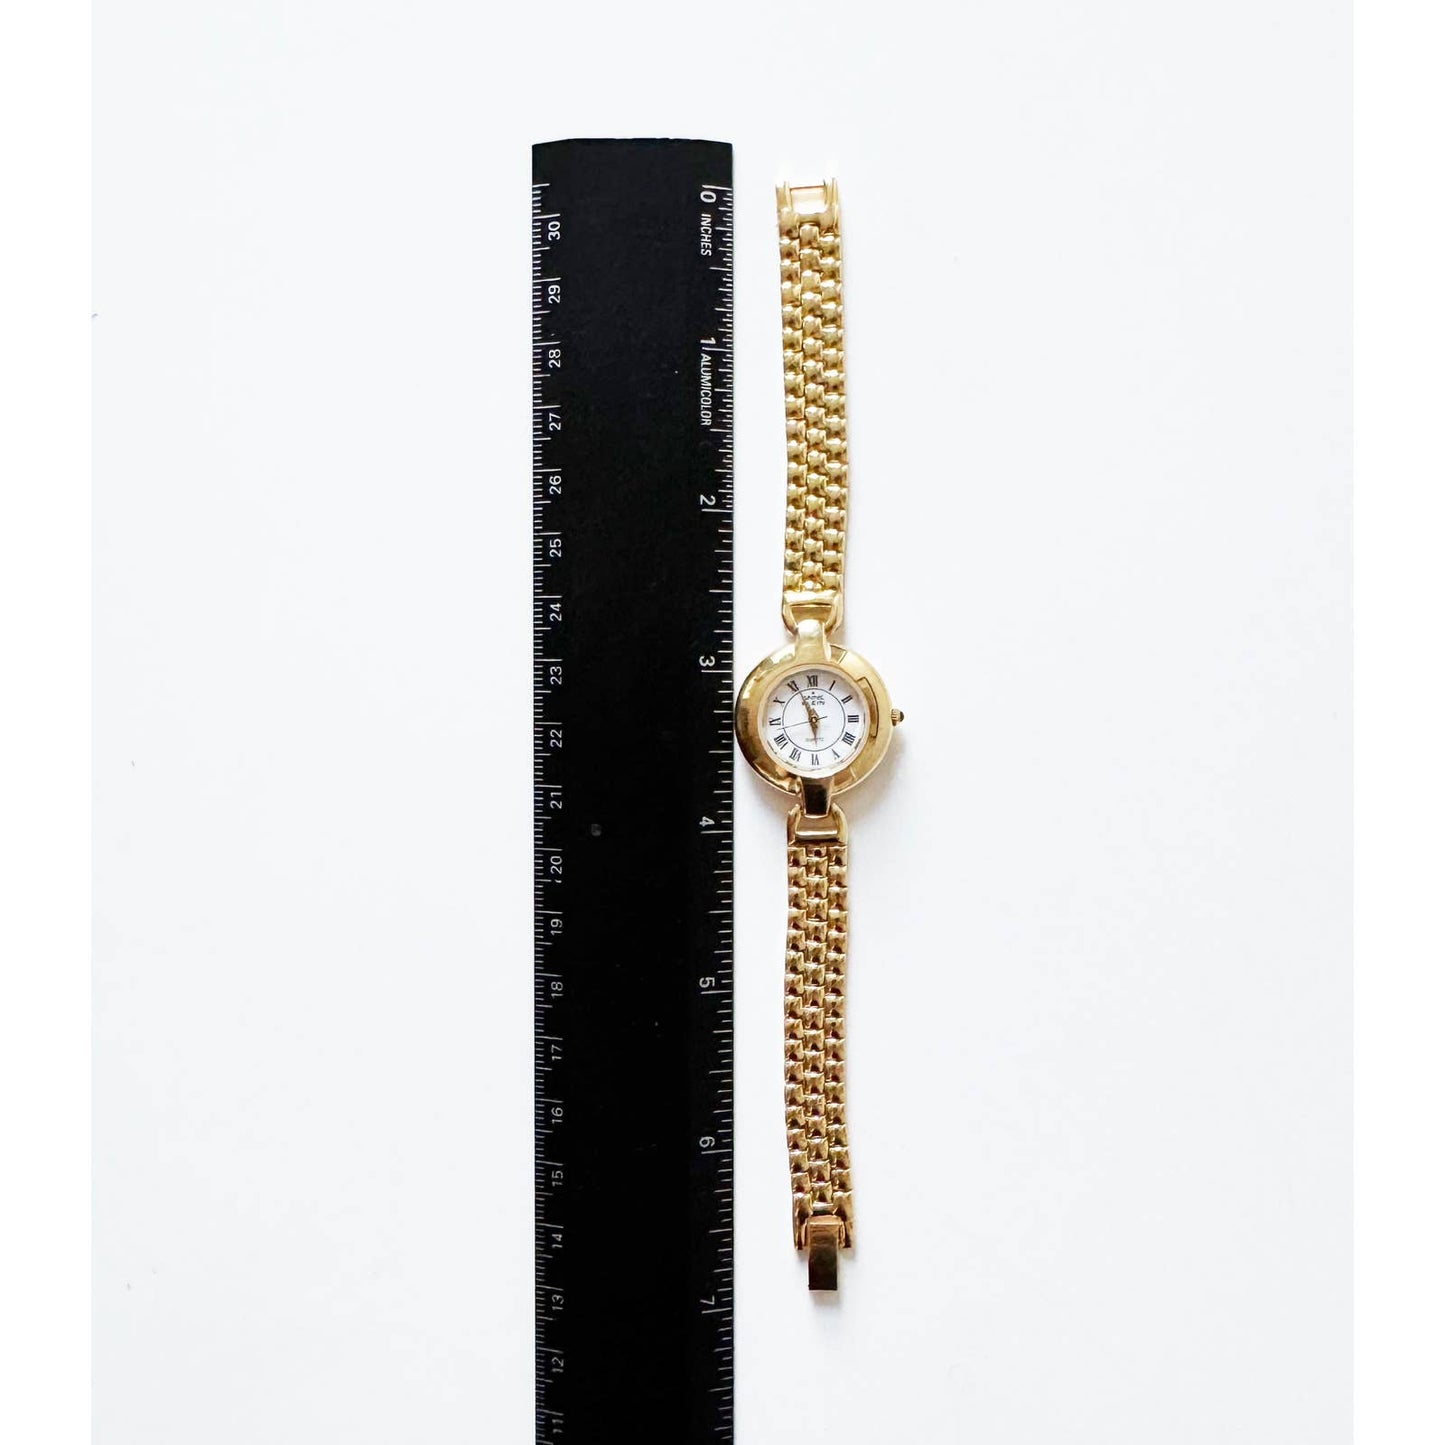 Vintage Gold Watch with Circular Face | Ann Klein